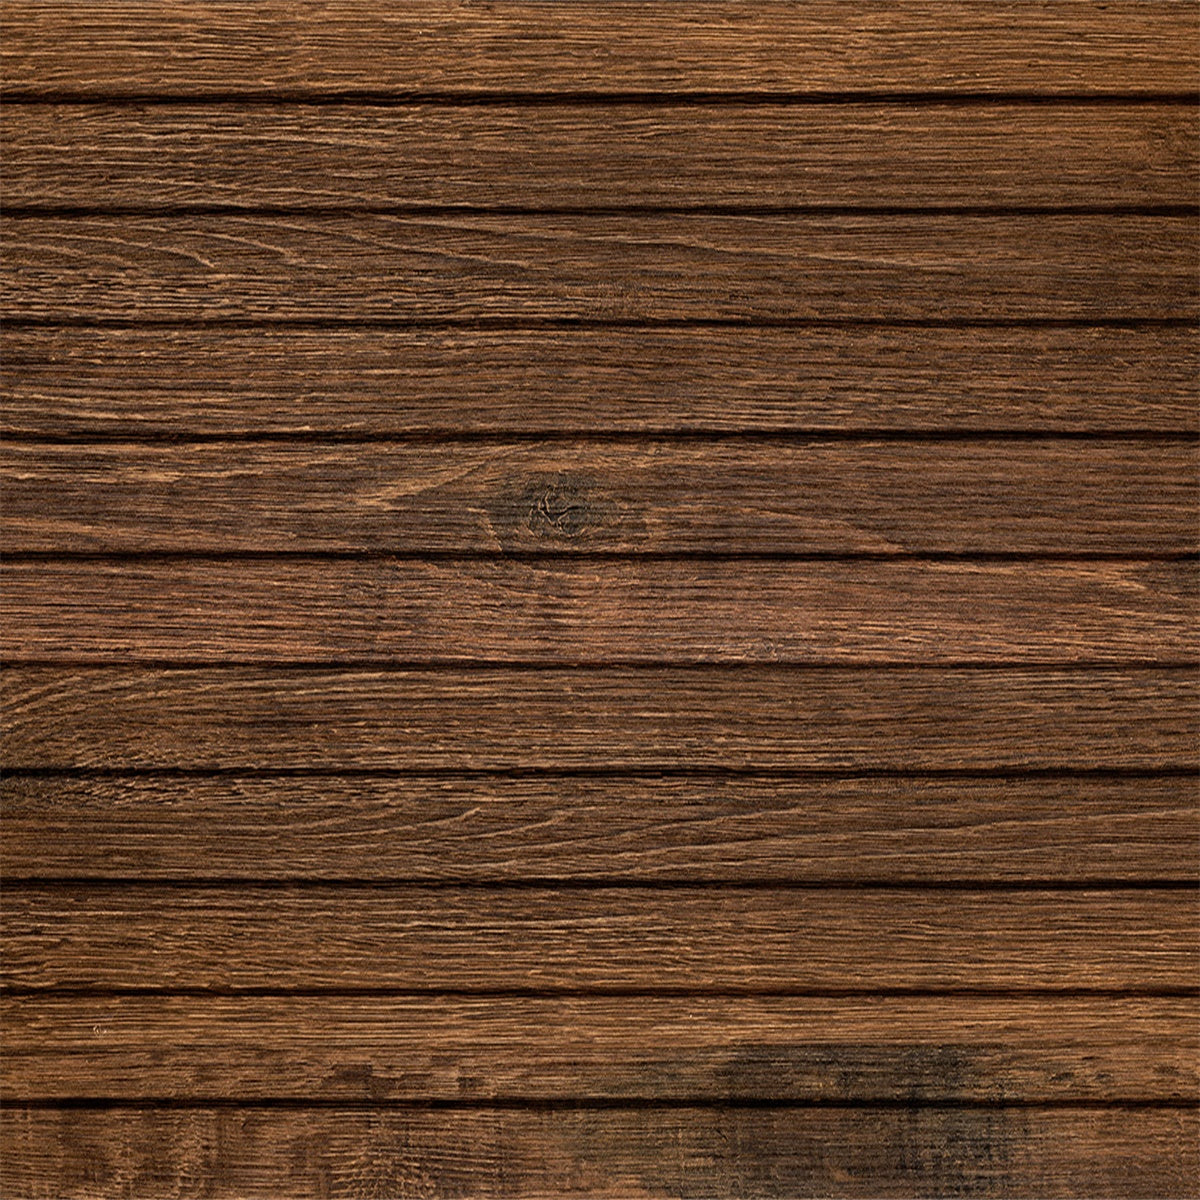 Buy Deep Brown Wood Floor wall Texture Backdrop Photography Backgrounds ...